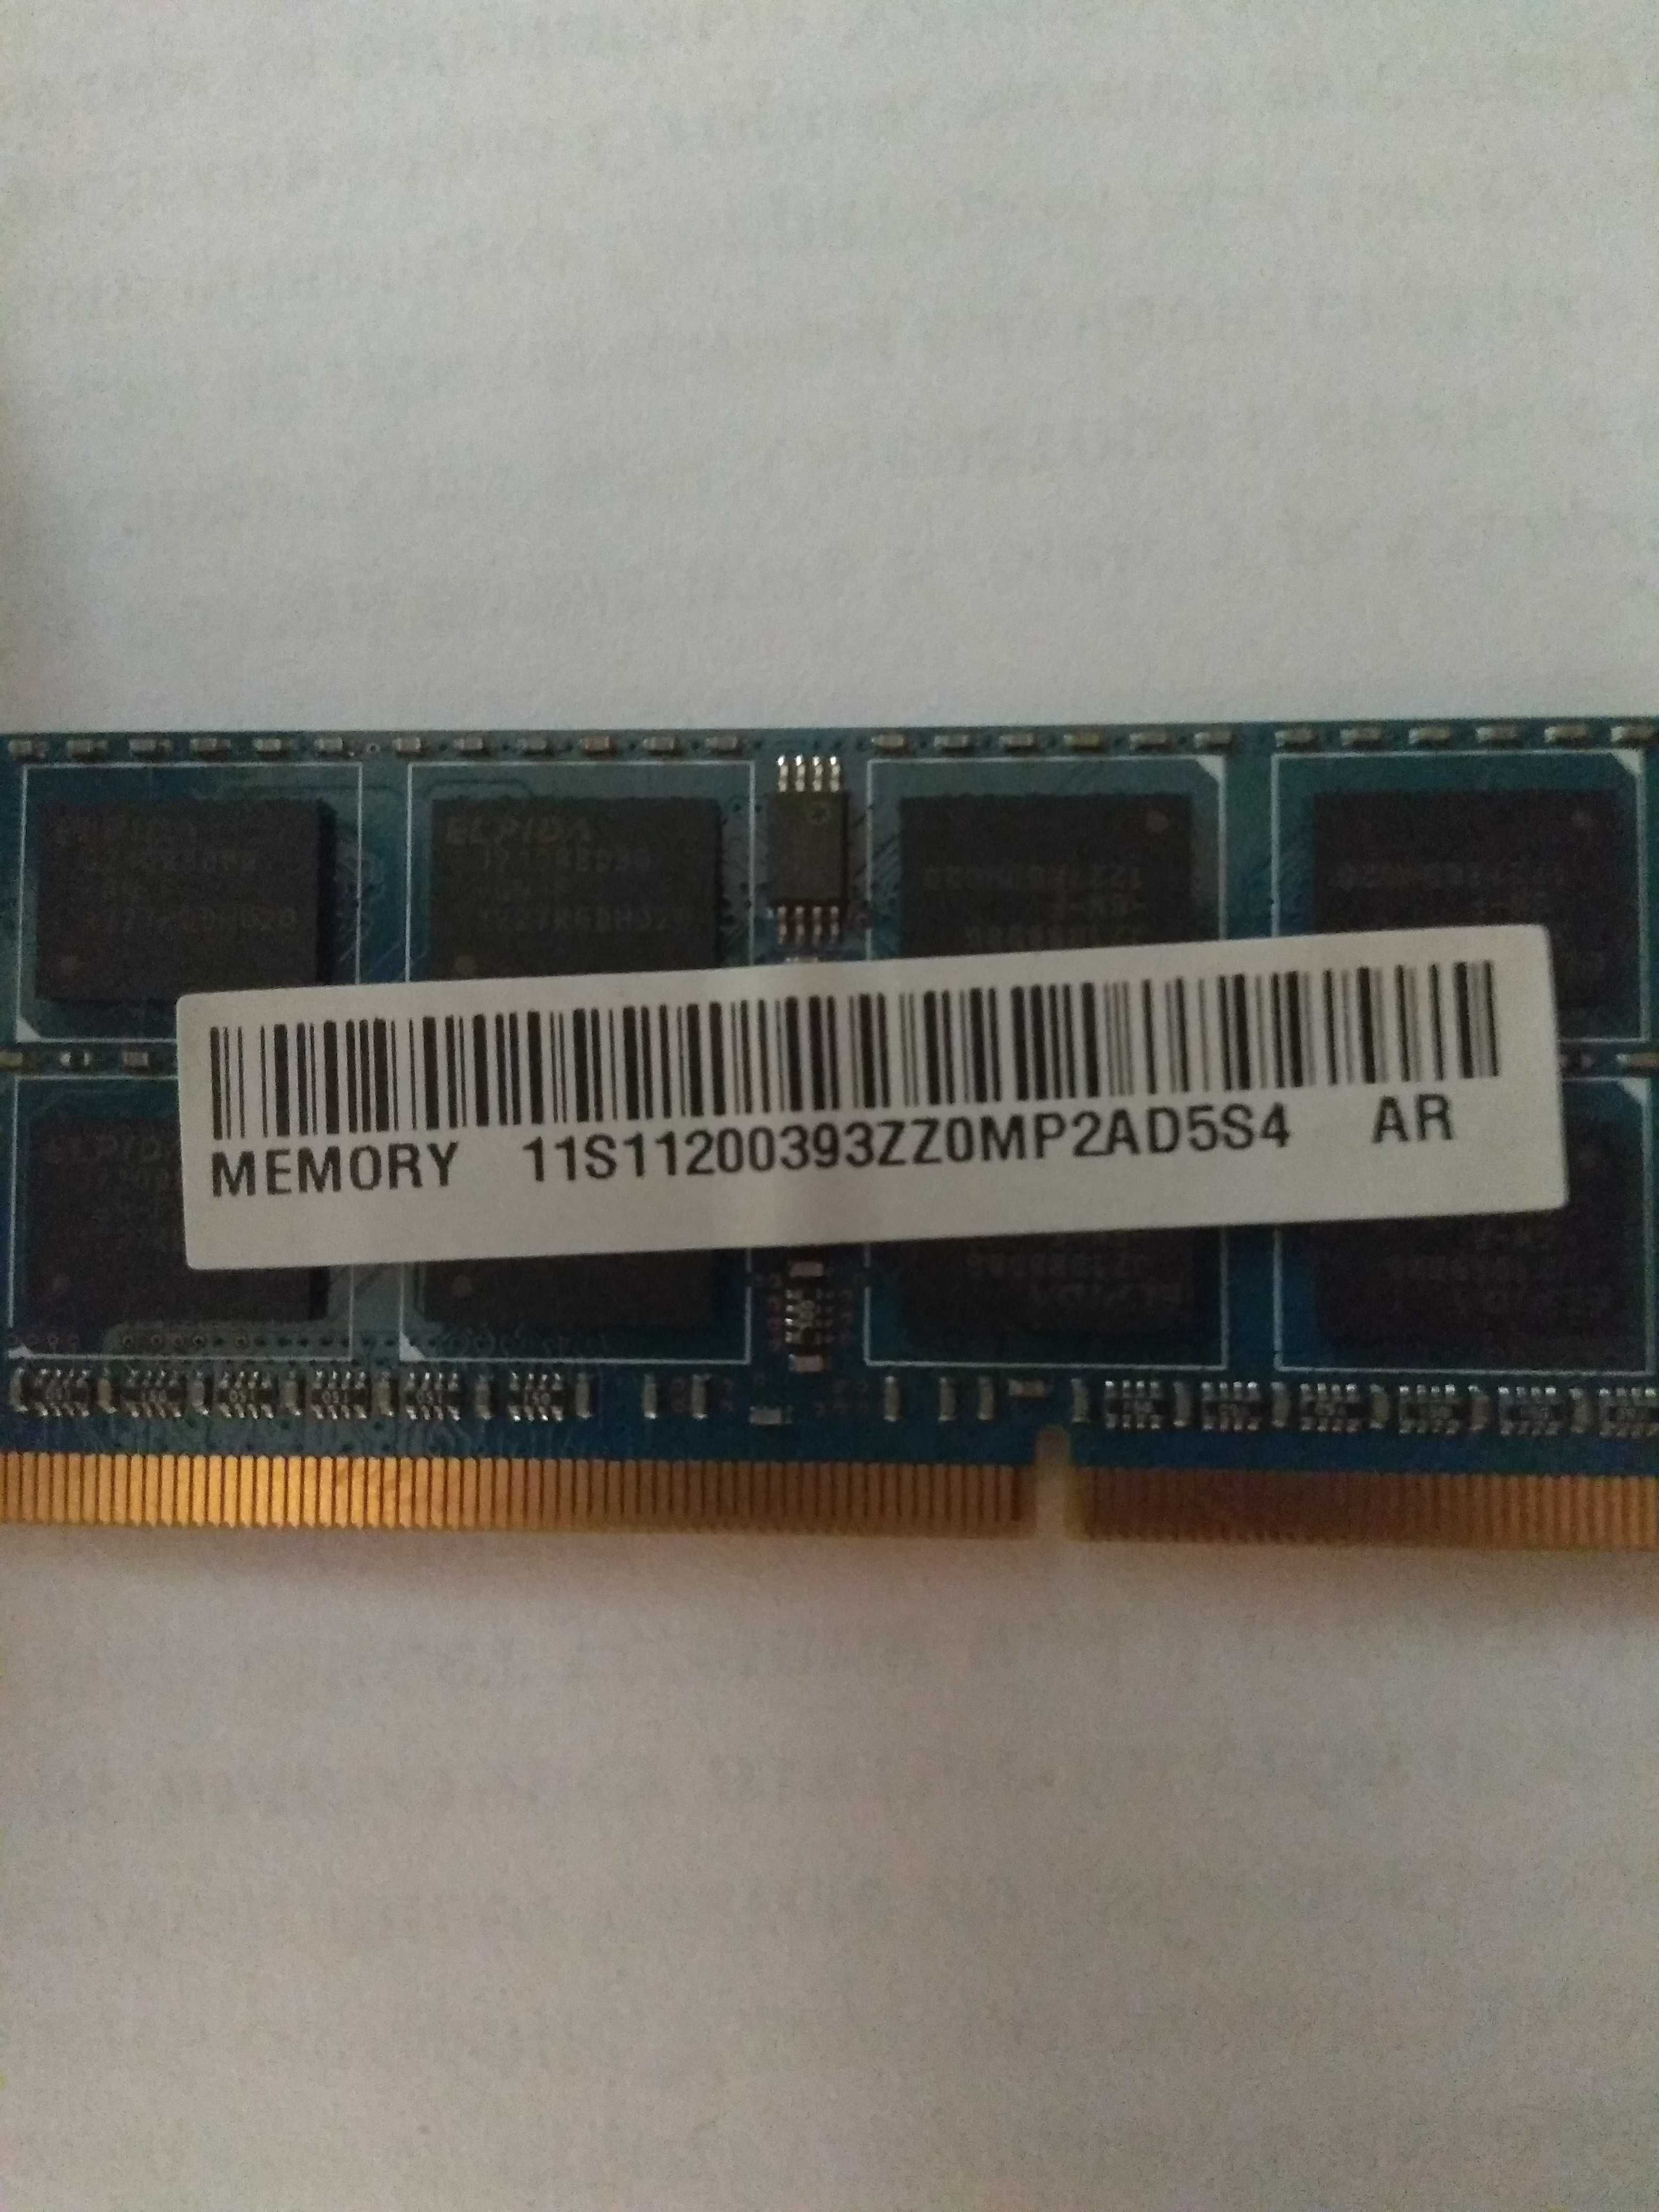 Оперативная память для ноутбука DDR3 объем 4 G формфактор SODIMM